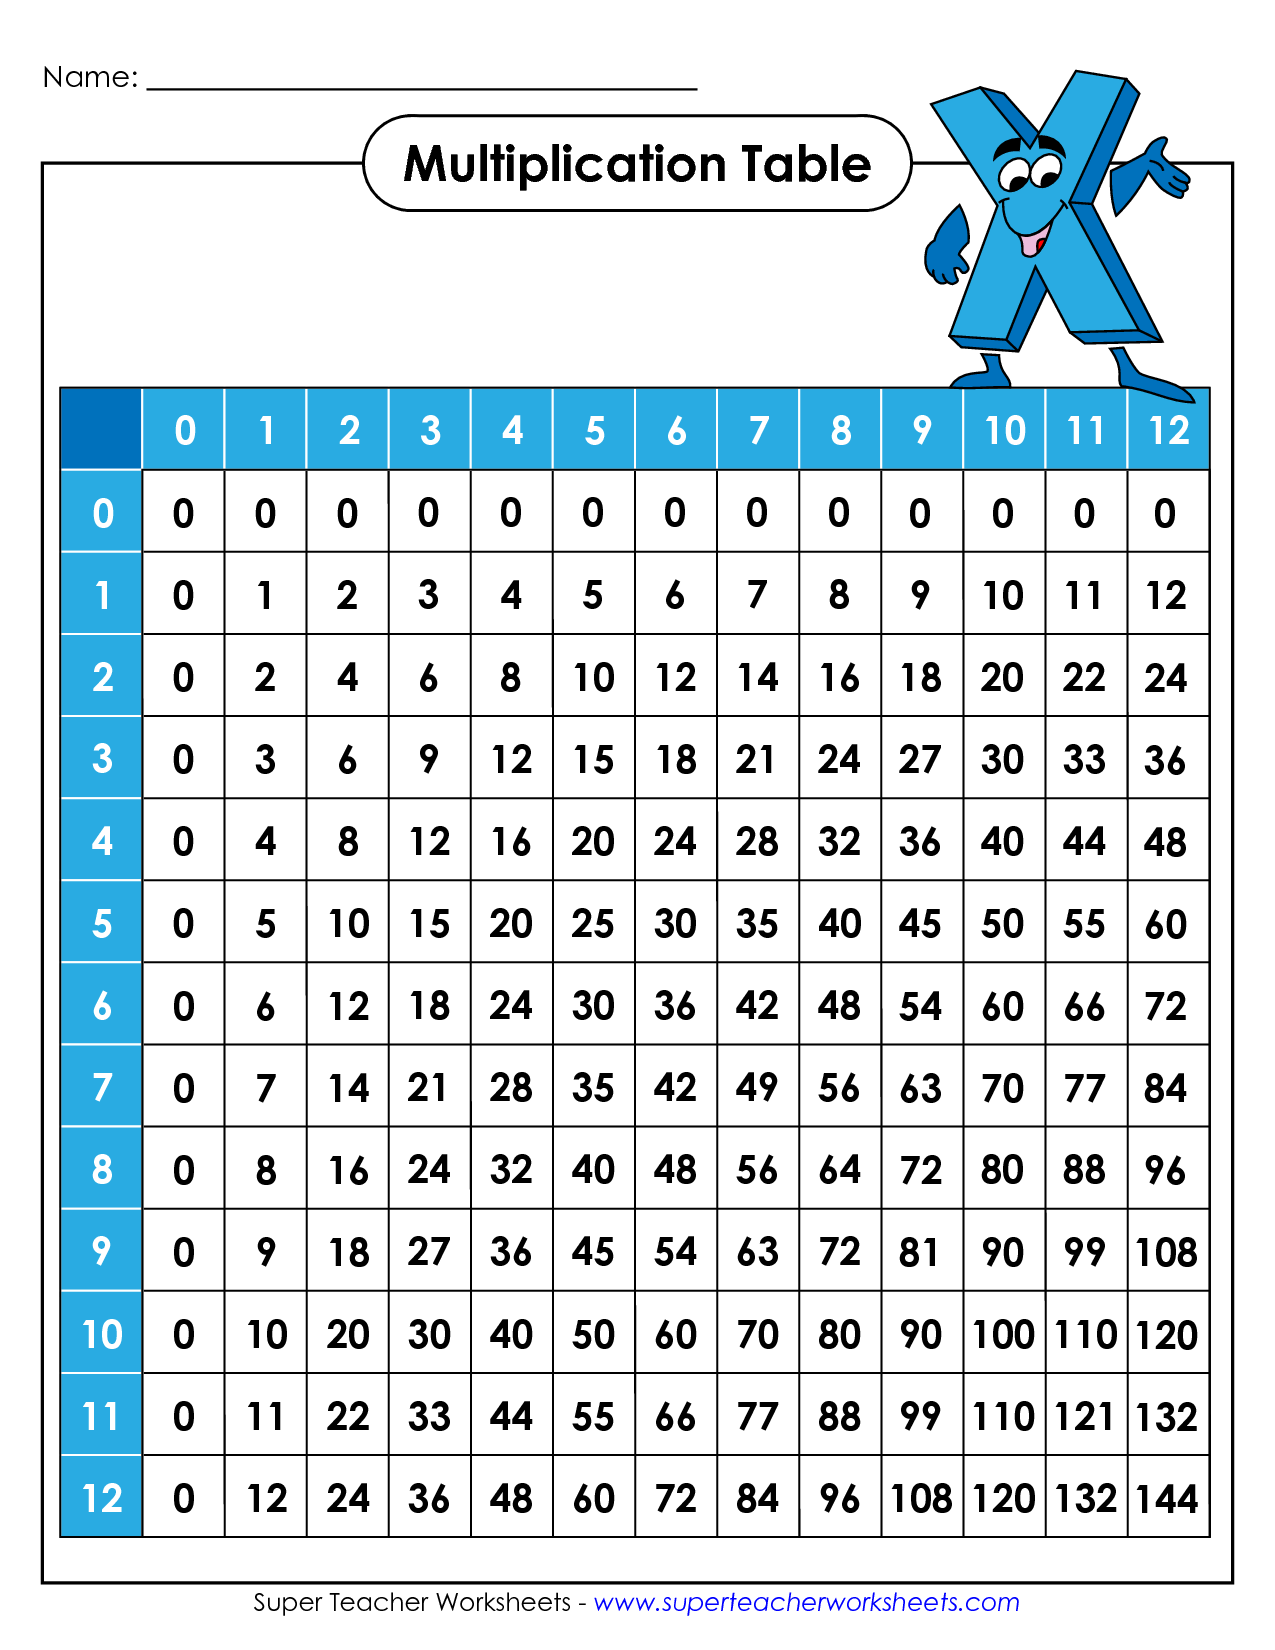 free-printable-multiplication-chart-0-12-printable-multiplication